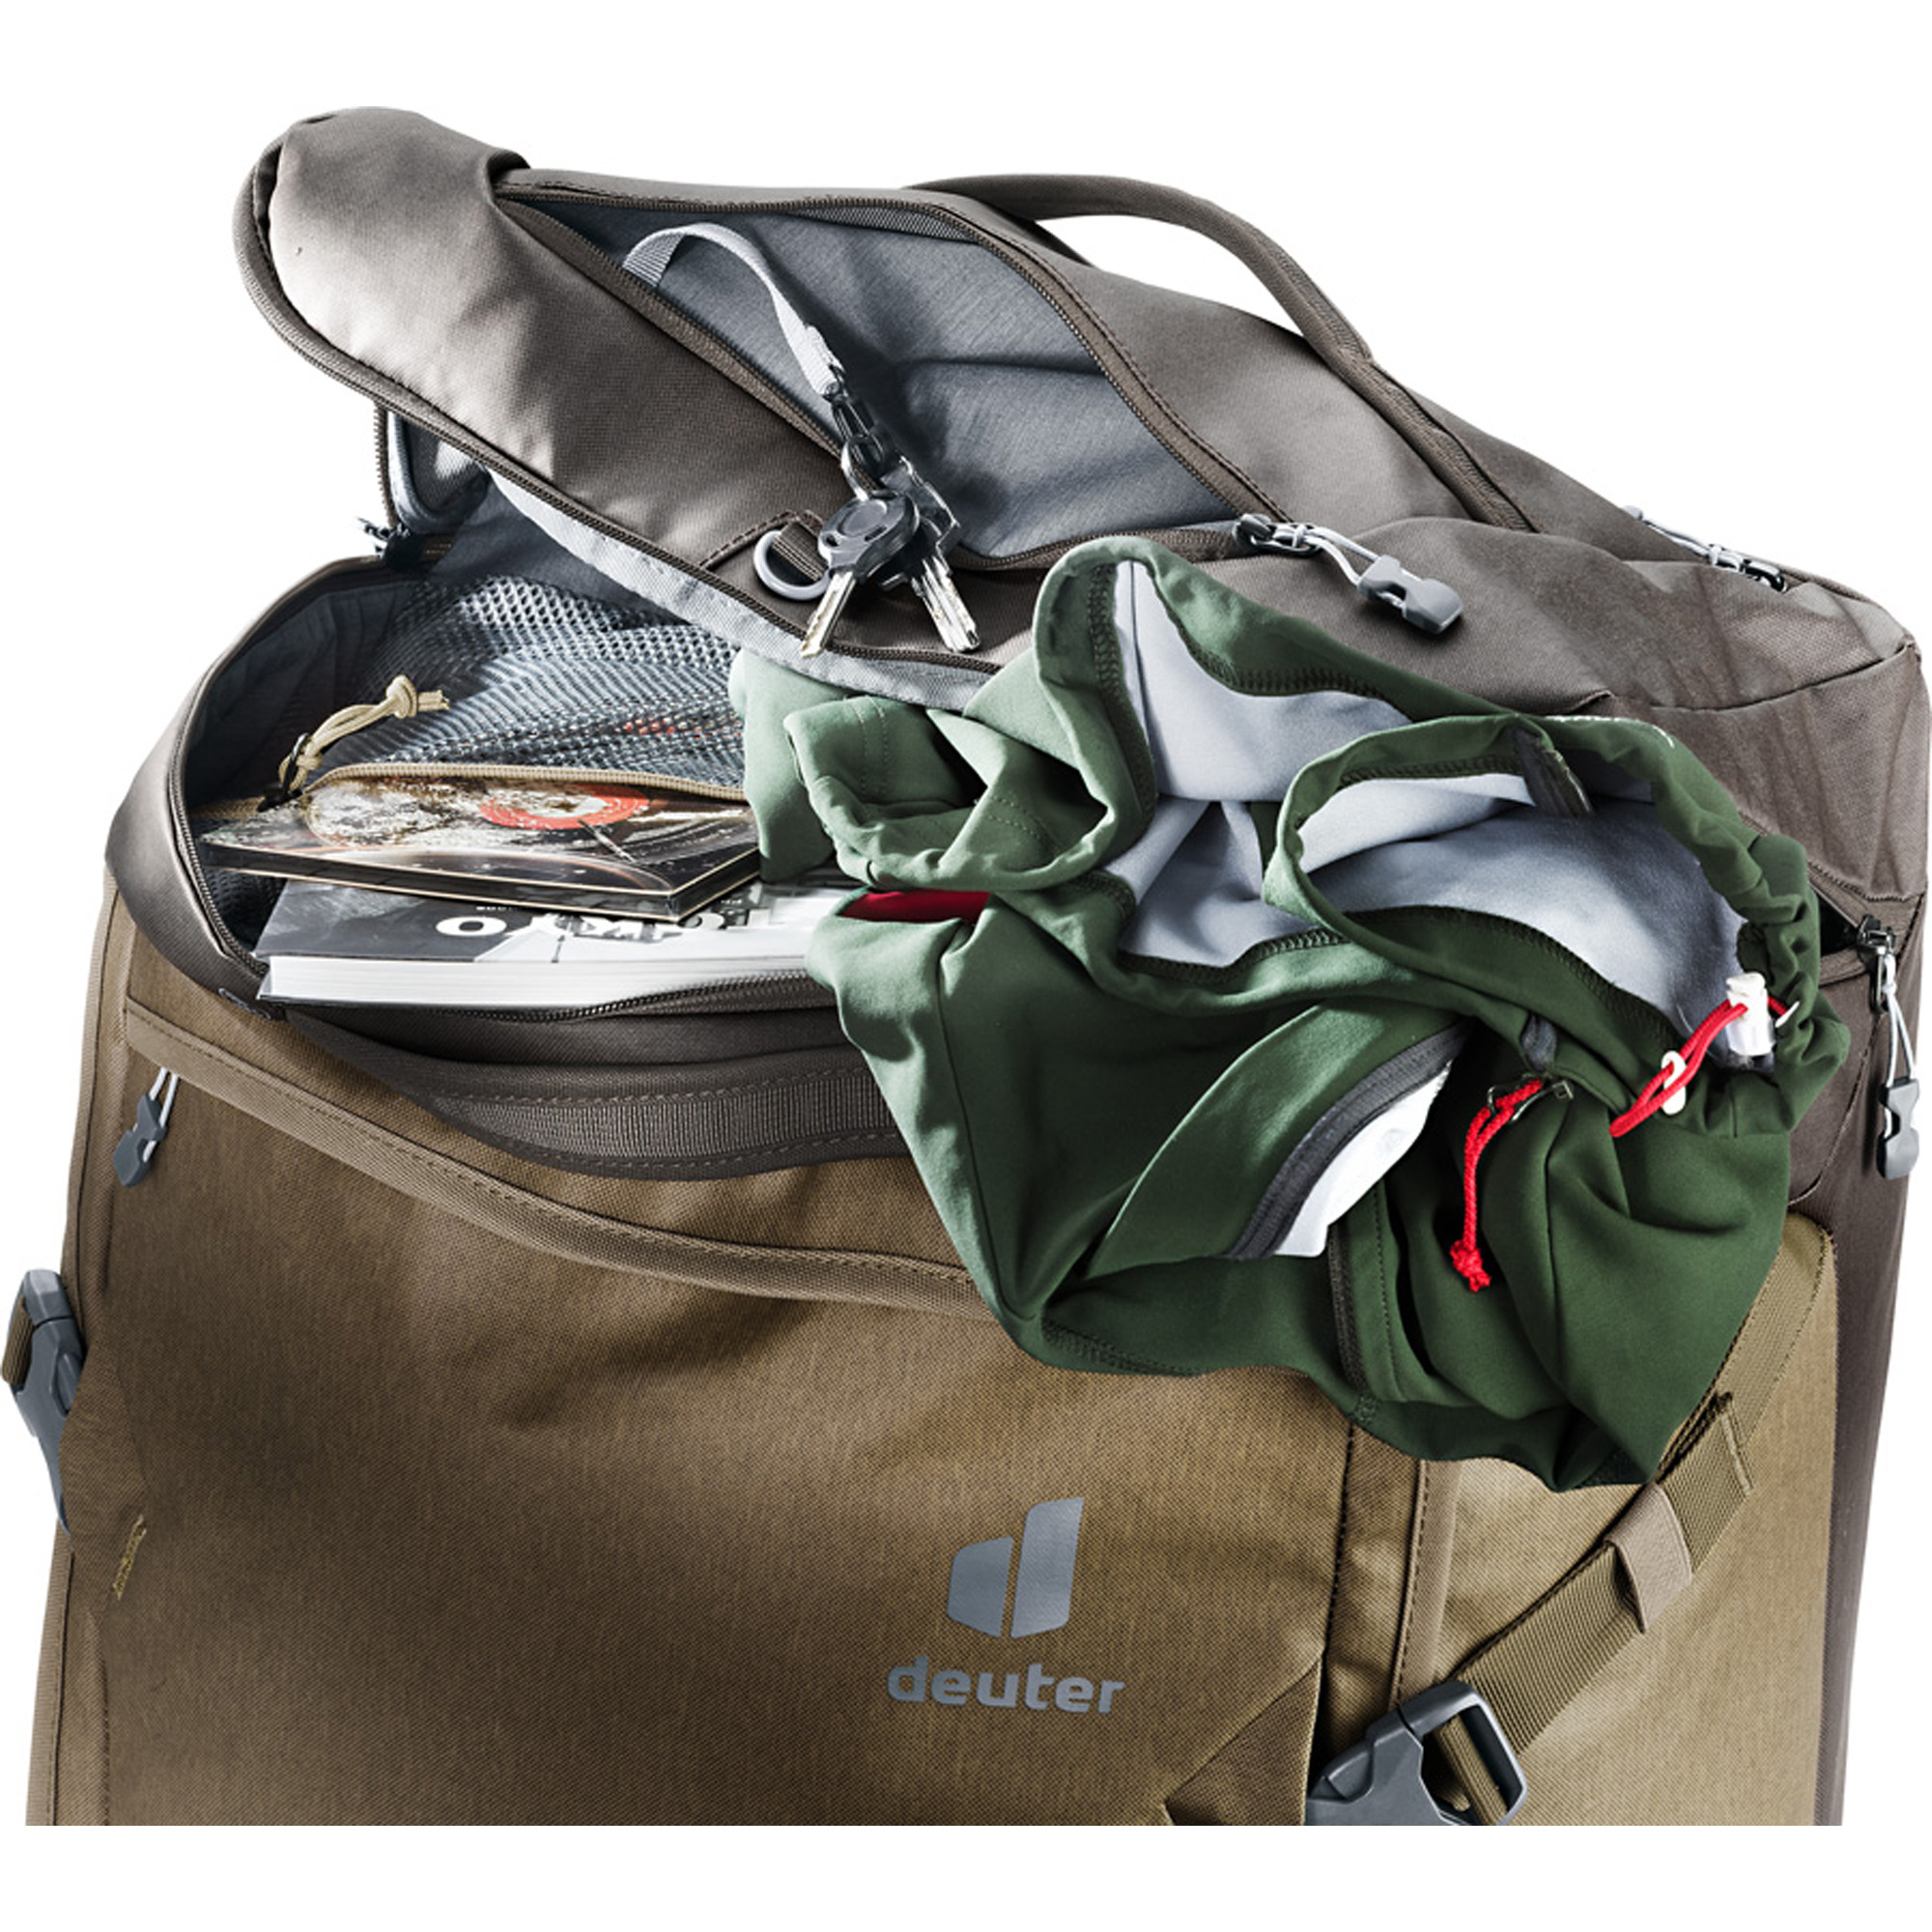 Deuter AViANT Pro Movo 60 2 Wheel Duffel Bag